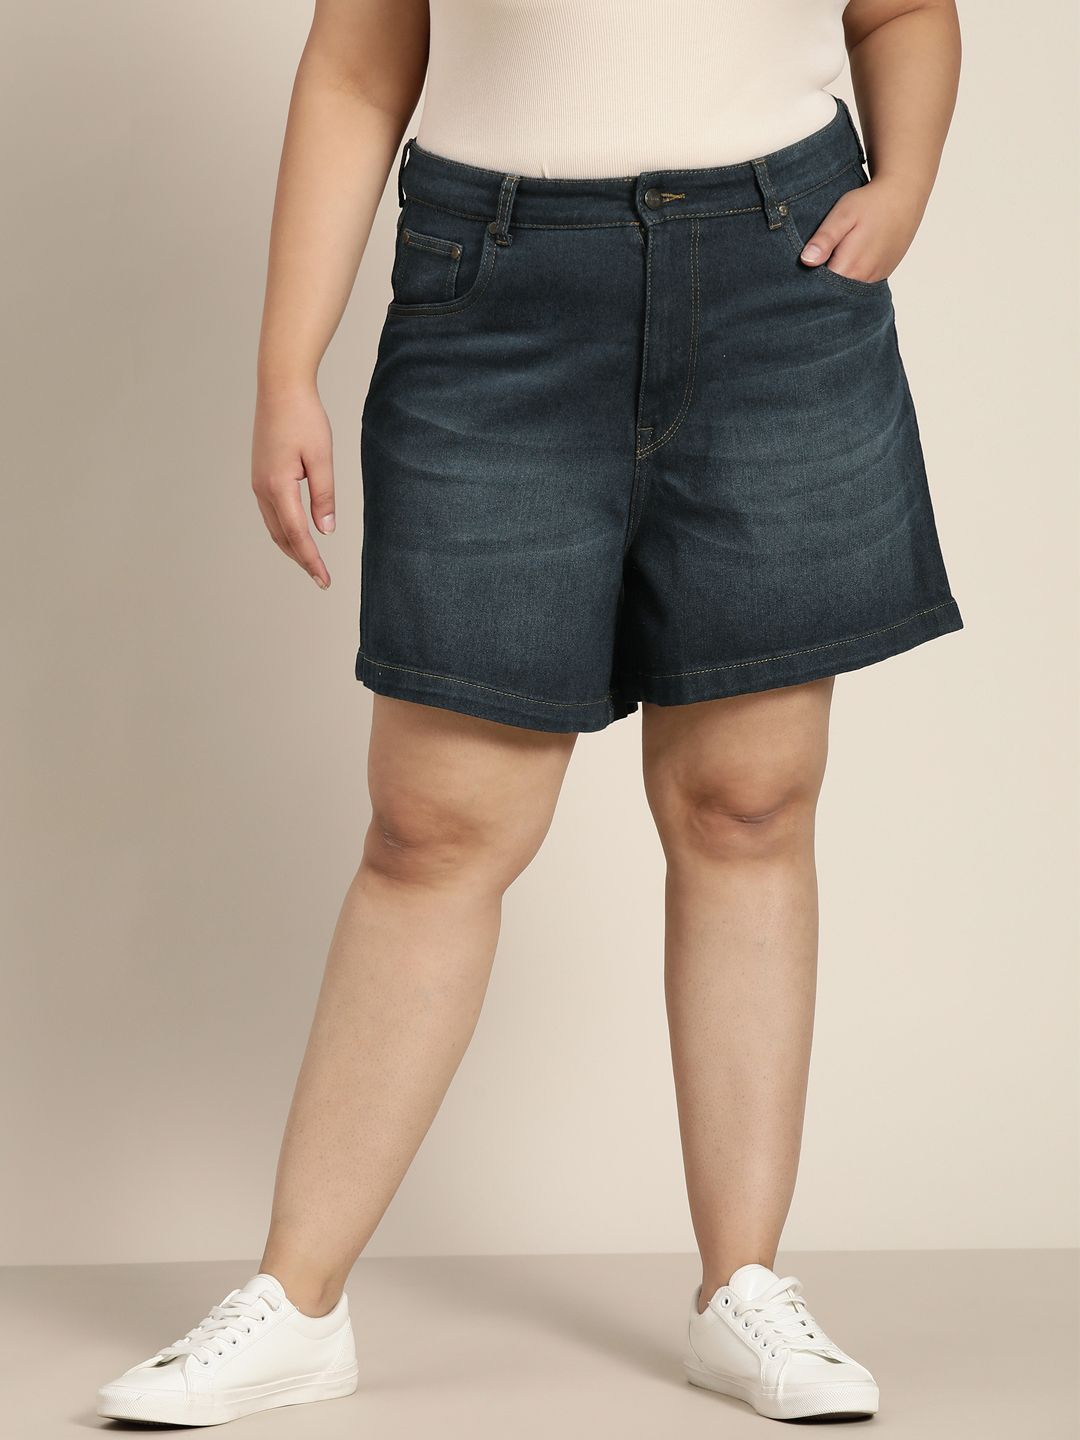 Sztori Women Plus Size Navy Blue Woven Denim Shorts Price in India